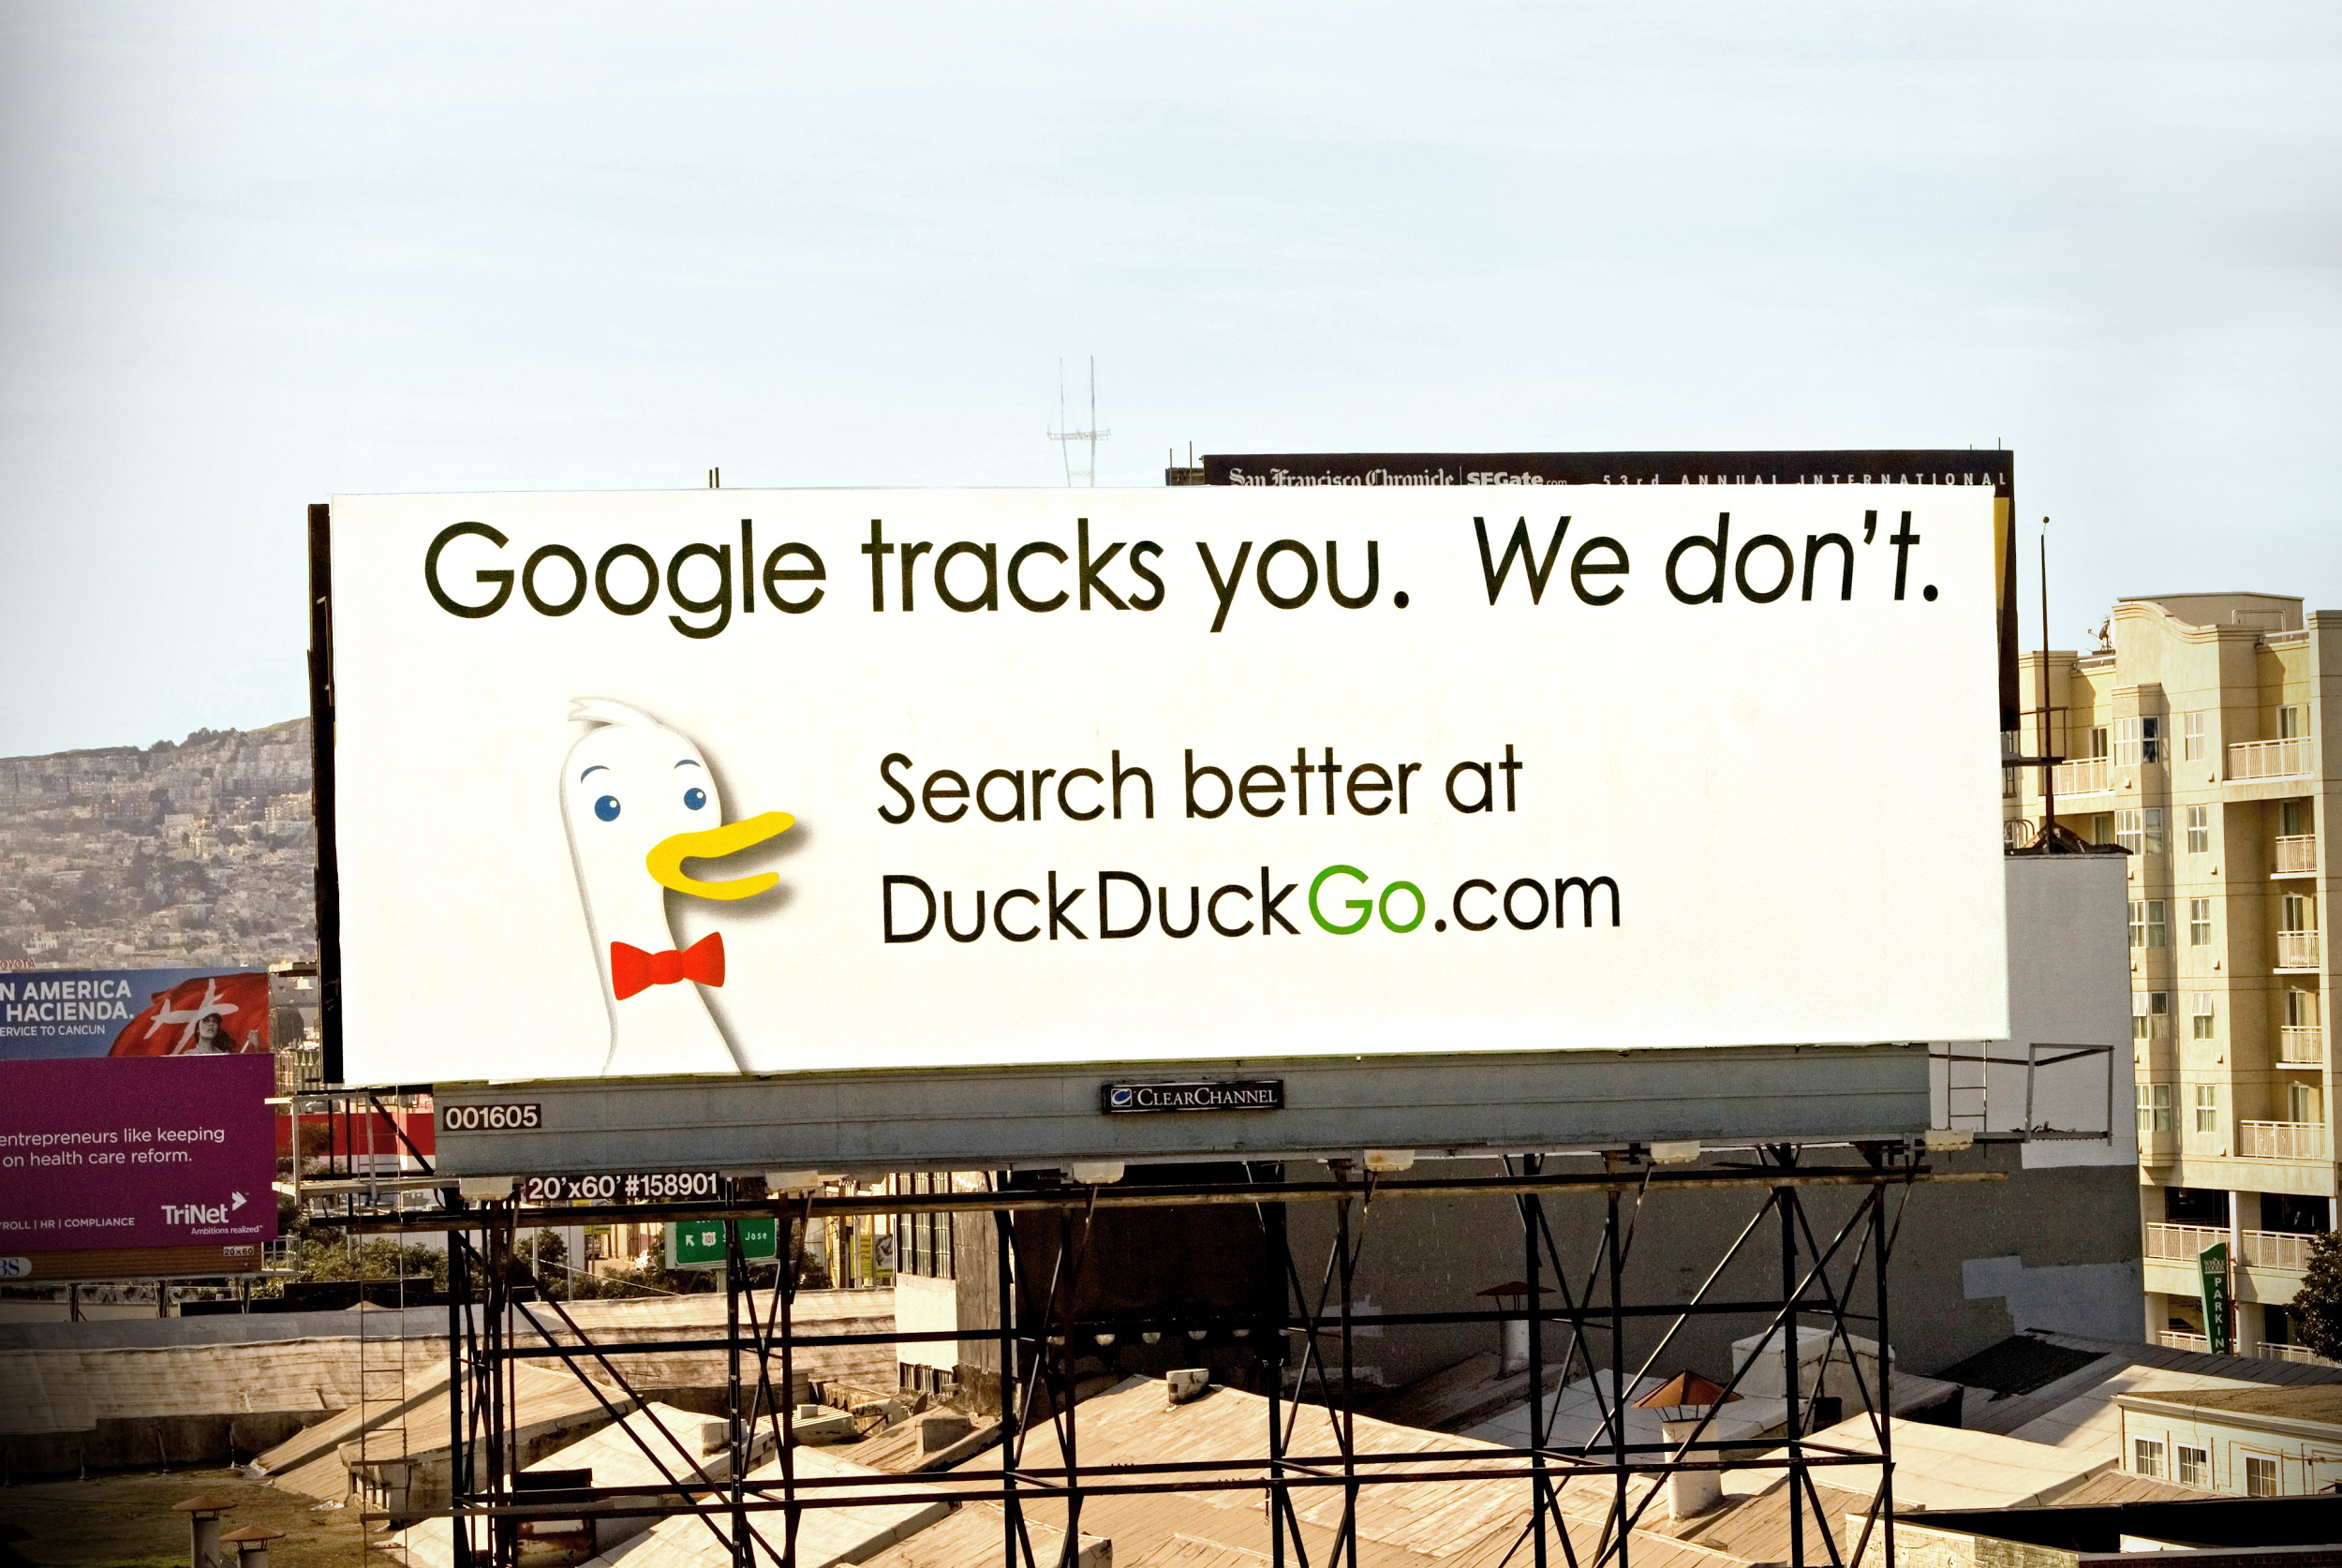 Screenshot showing a billboard for duckduckgo.com